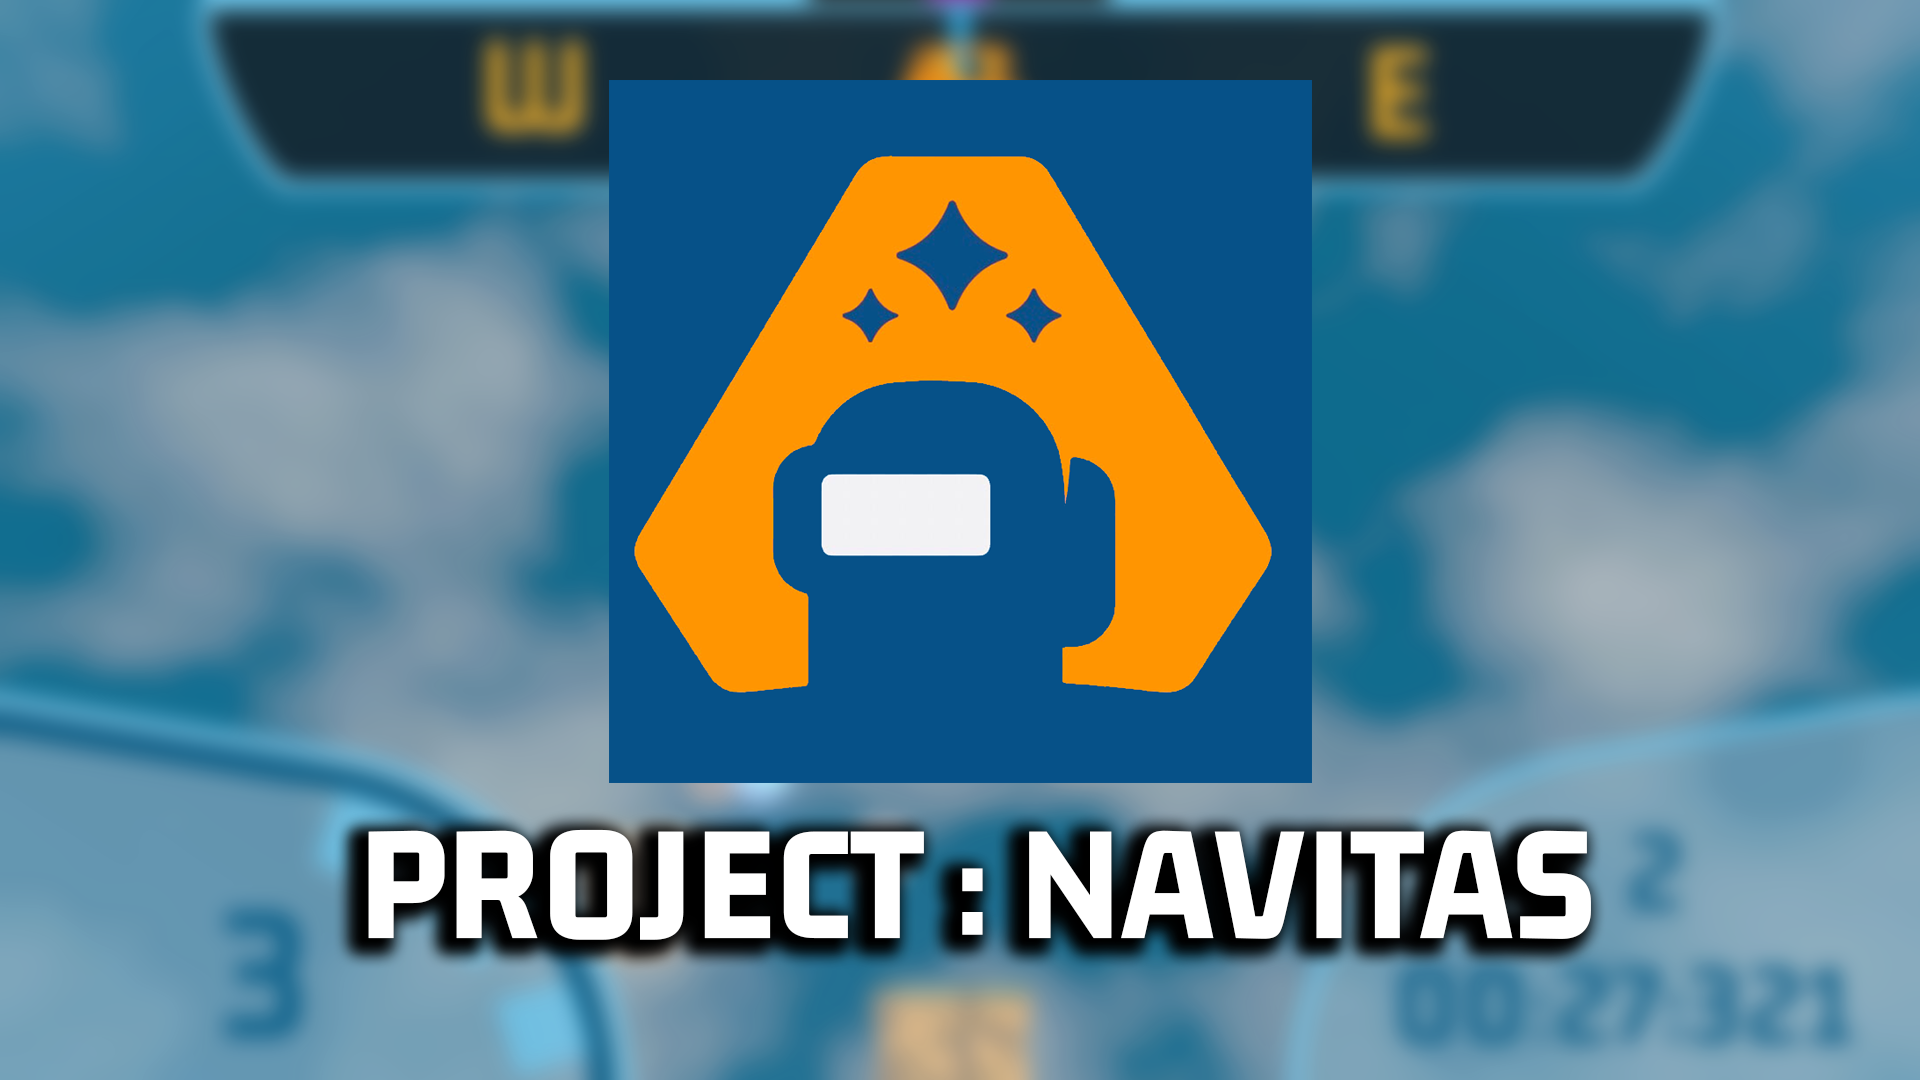 Project: Navitas